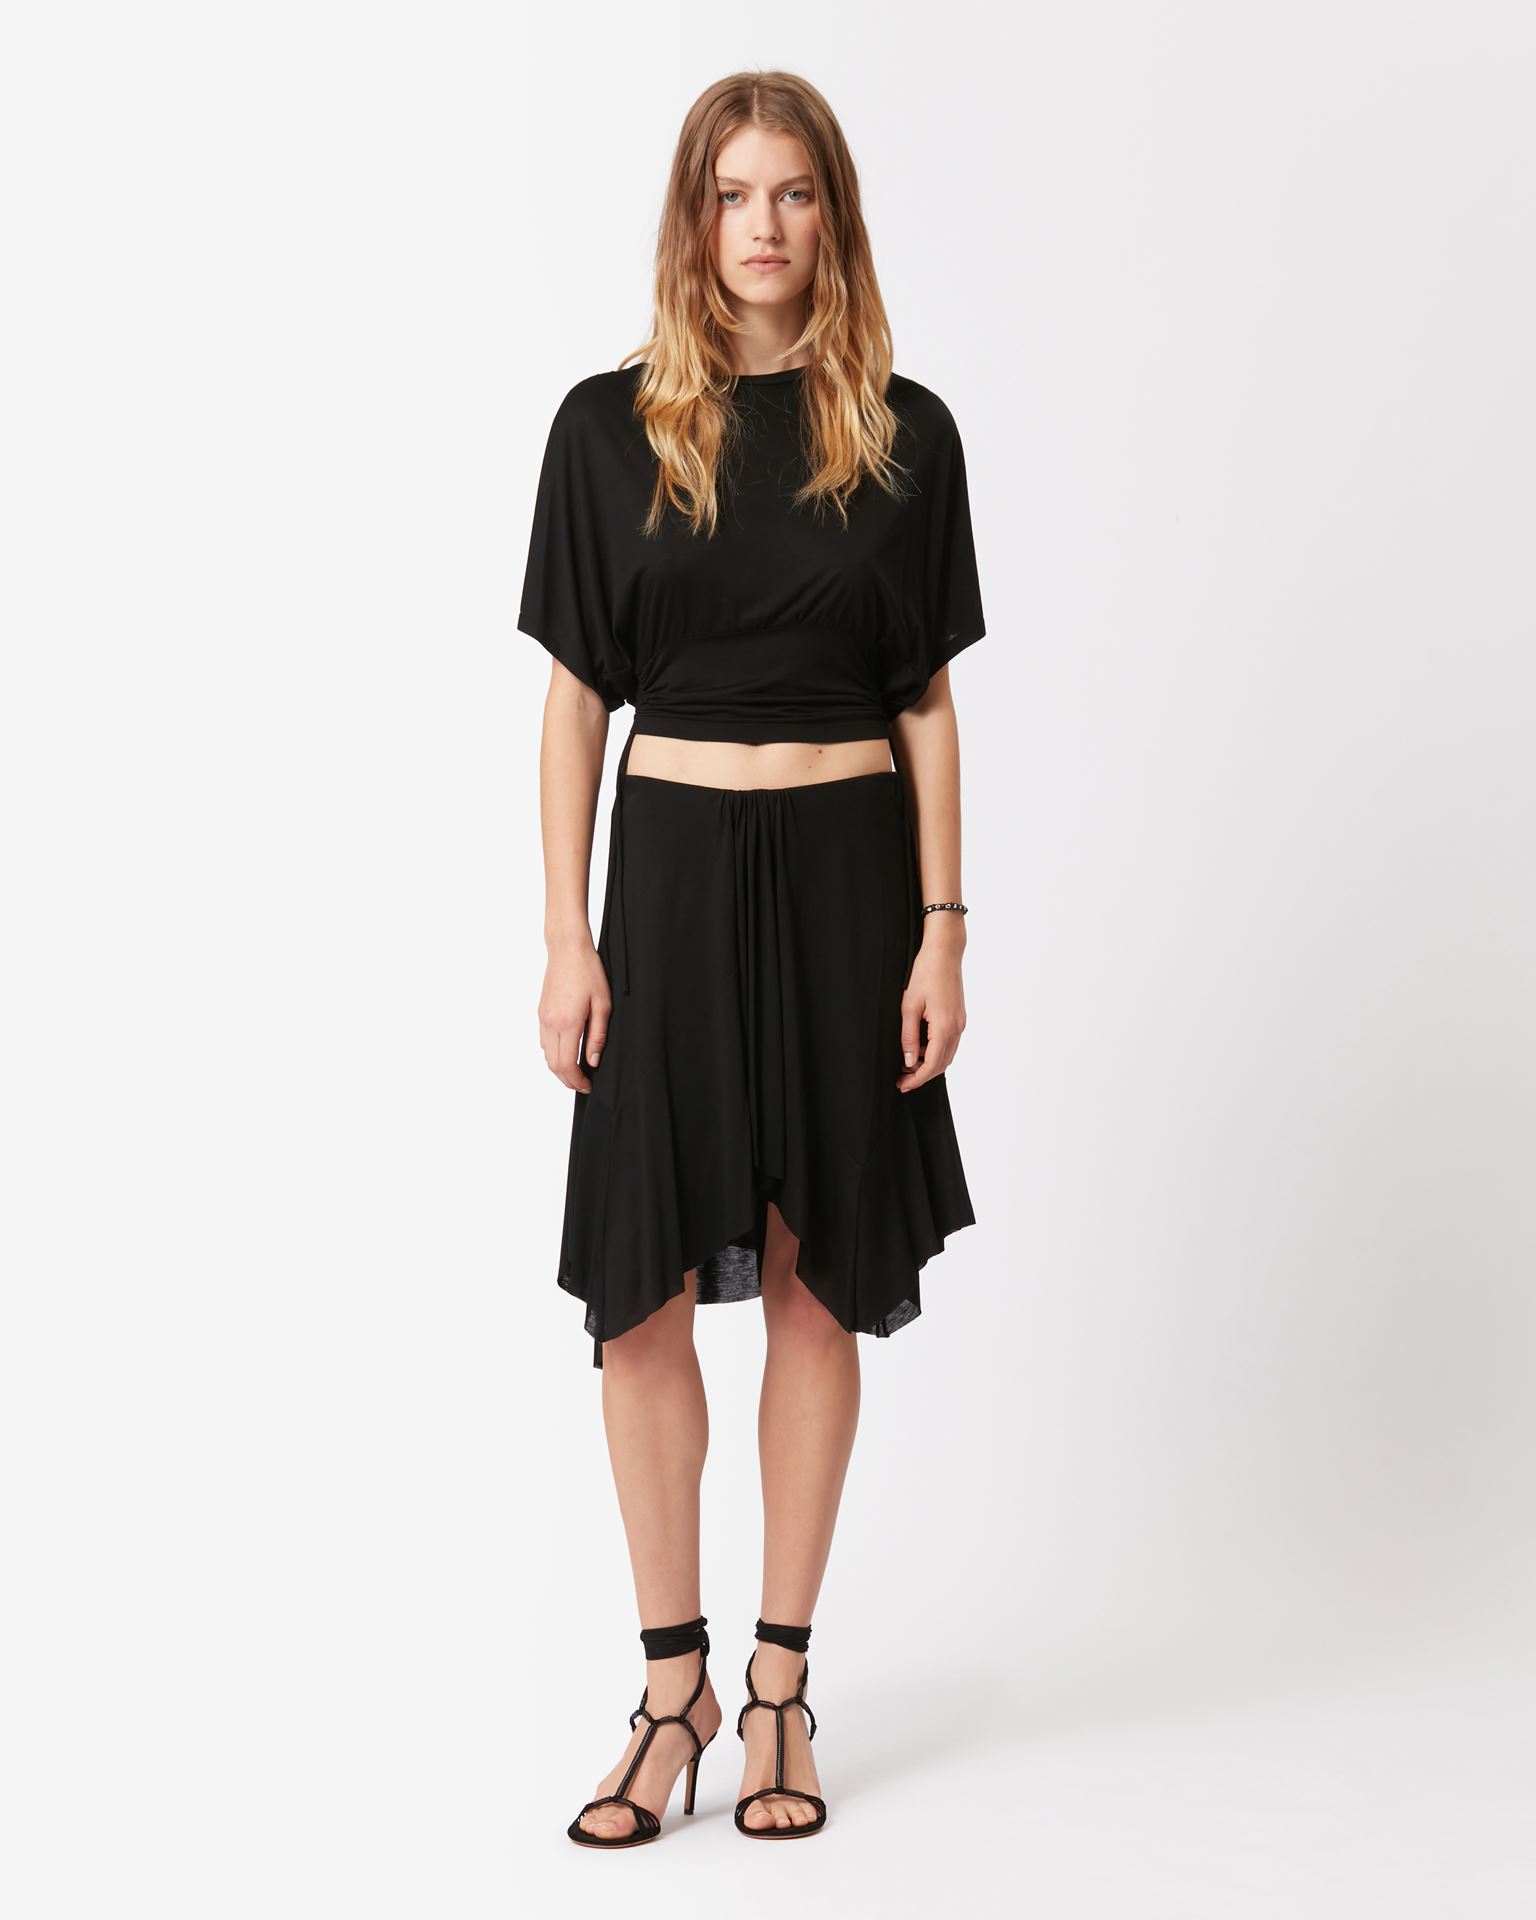 Isabel Marant, Fenecia Skirt - Women - Black